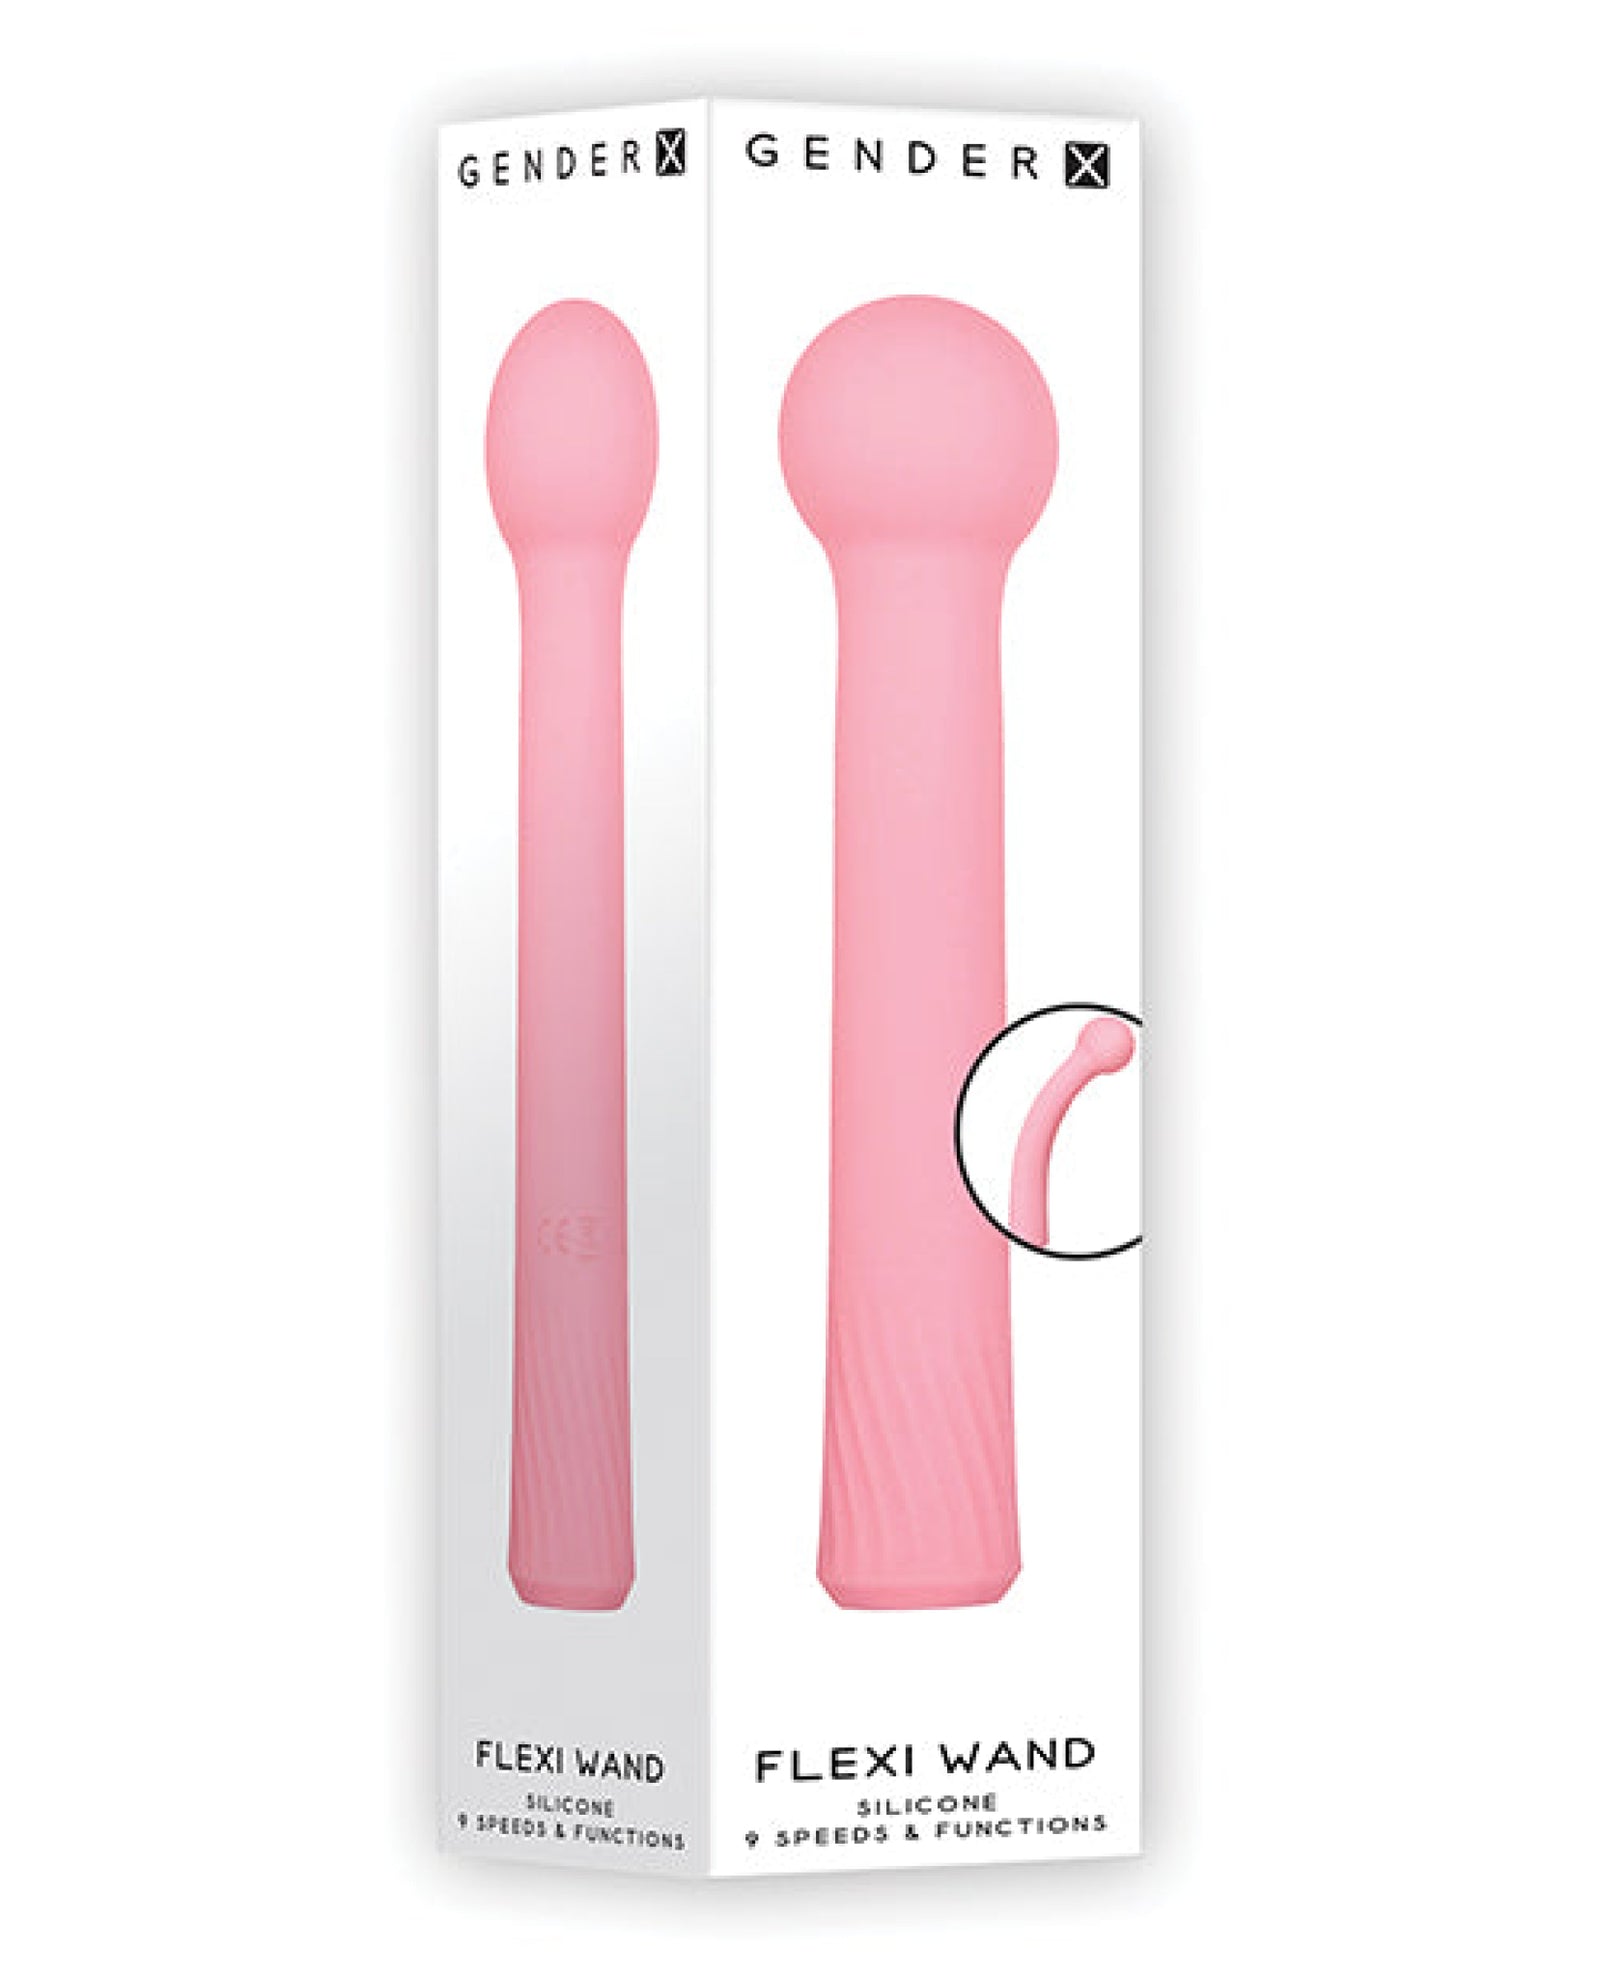 Gender X Flexi Wand - Pink Gender X